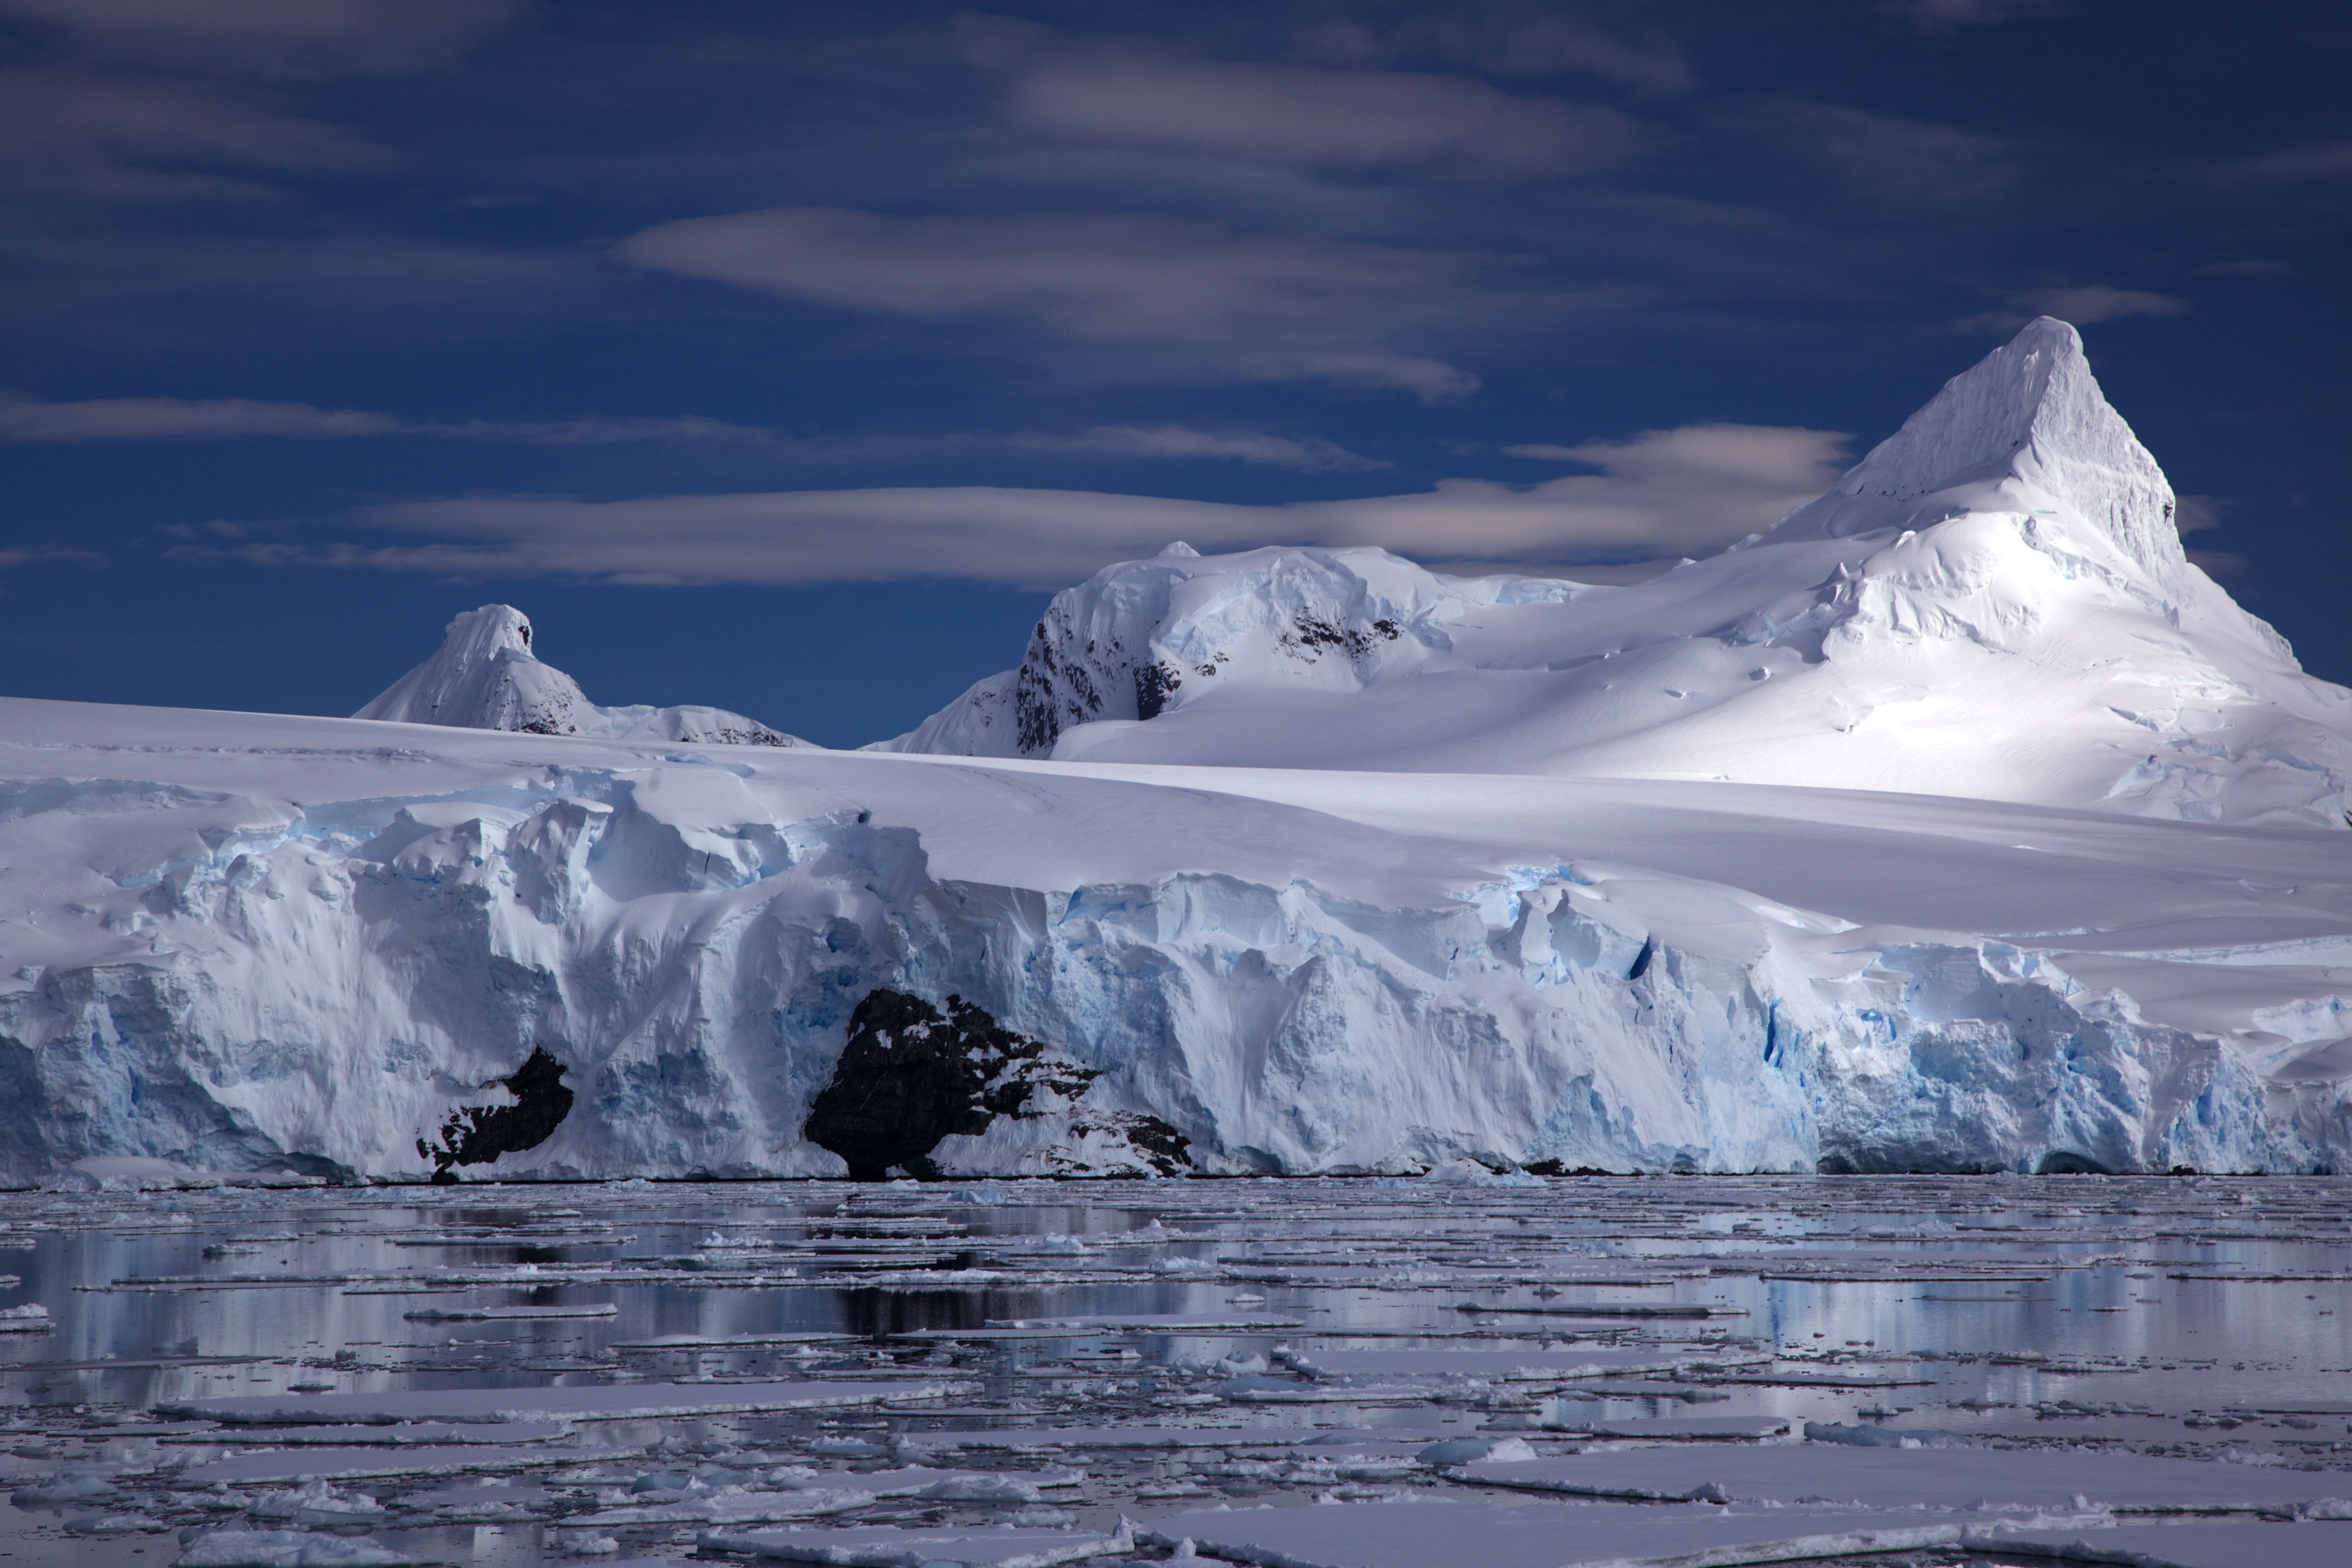 Антарктический ветер. Антарктида. Горы Гамбурцева в Антарктиде. Ледяной Покров Антарктиды. Антарктида ледяной материк.